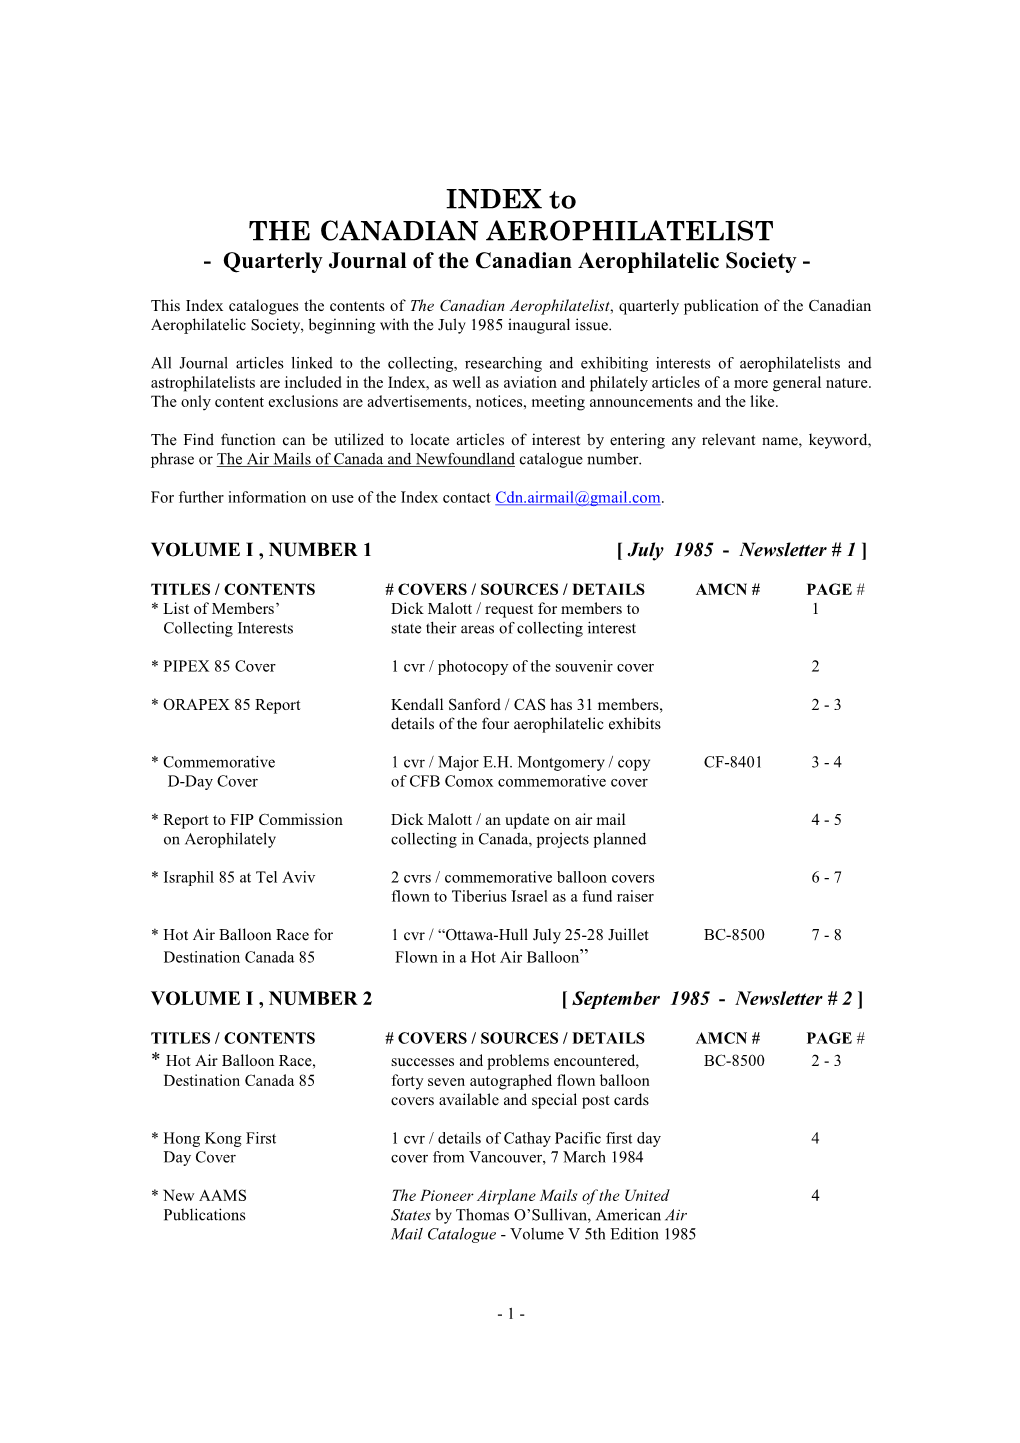 INDEX to the CANADIAN AEROPHILATELIST - Quarterly Journal of the Canadian Aerophilatelic Society